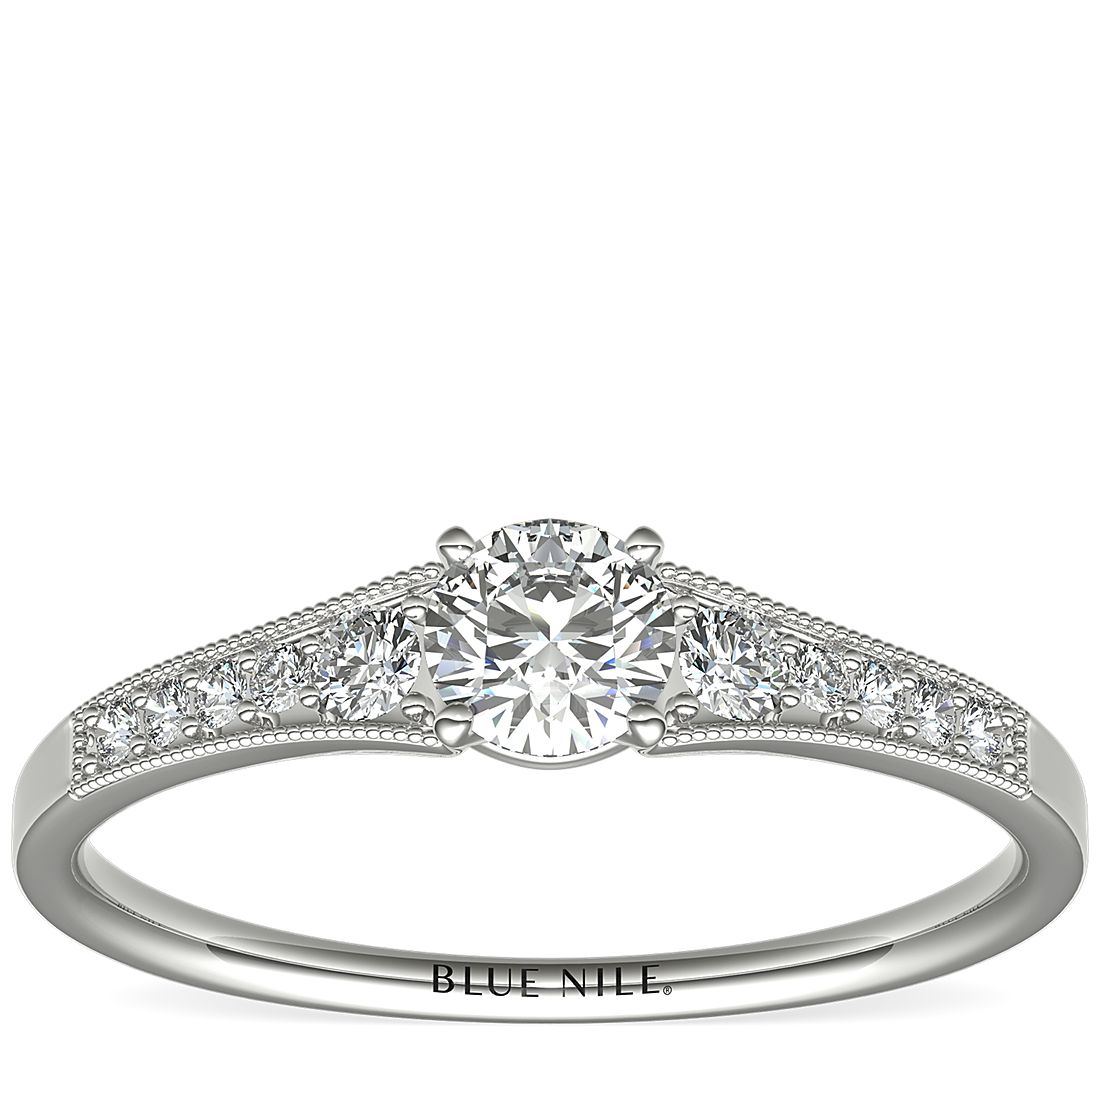 1/3 Carat Ready-to-Ship Graduated Milgrain Diamond Engagement Ring in 14k White Gold